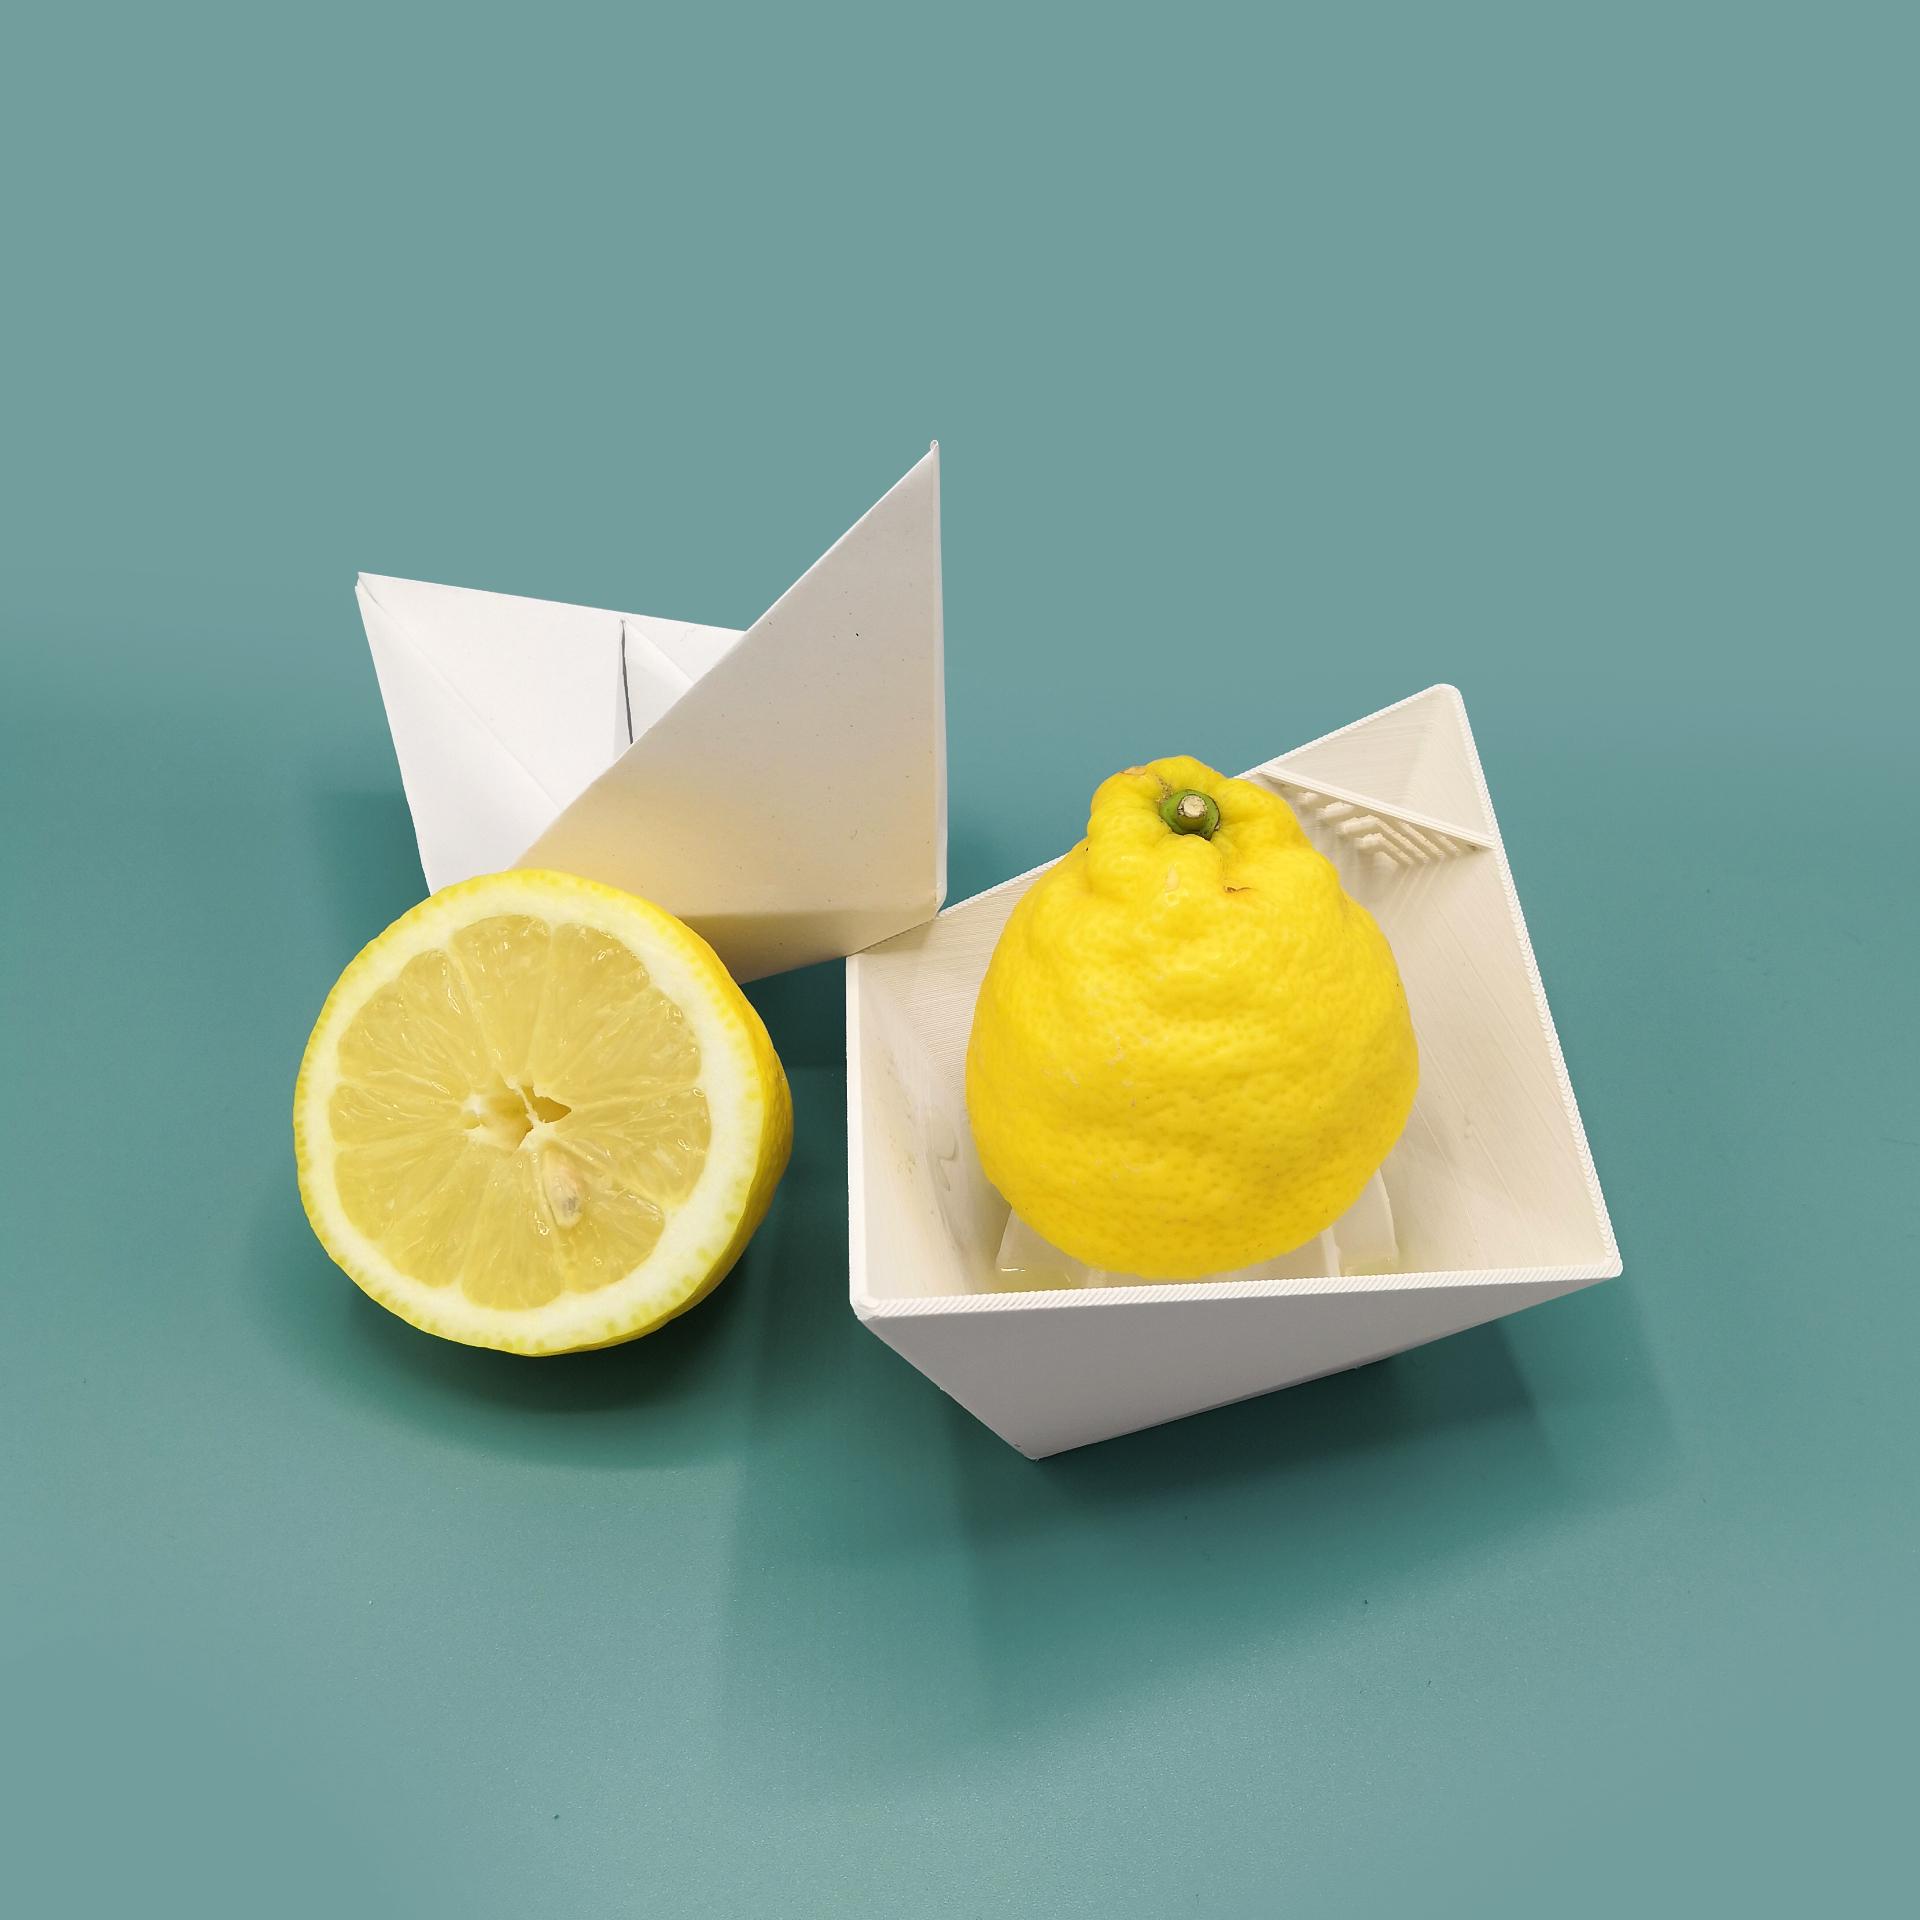 Citrus juicer “Boaty” 3d model